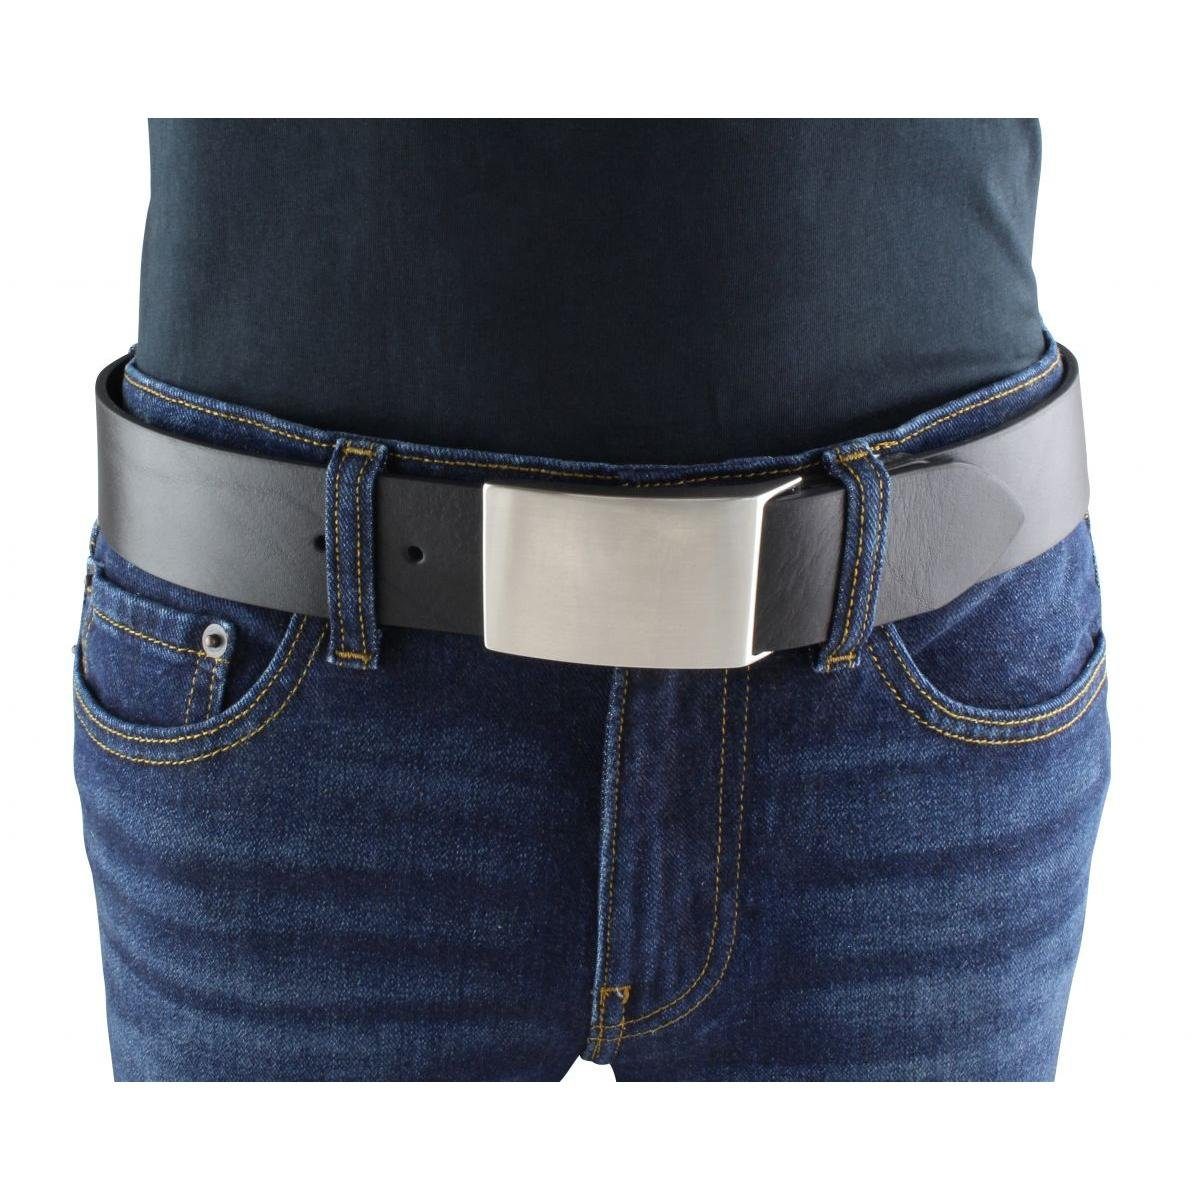 - - Herren cm für aus Vollrindleder Jeans-Gürtel Jeans 45mm 4,5 BELTINGER Ledergürtel Braun, Gürtel Silber